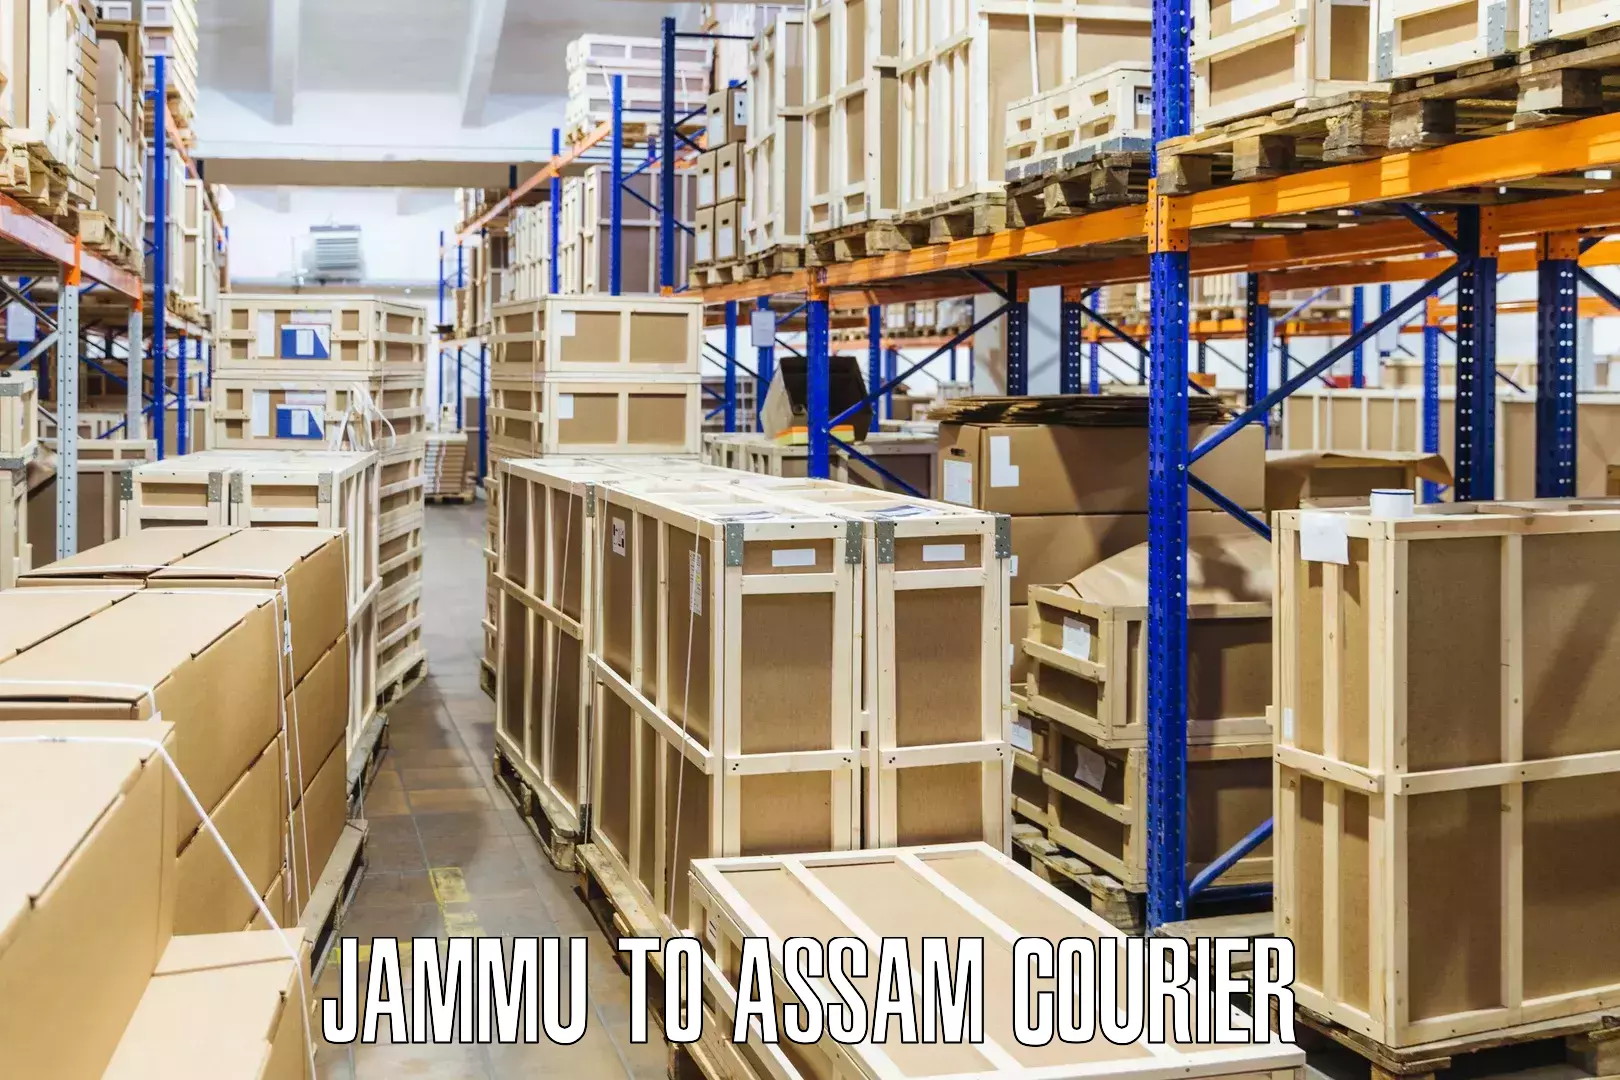 International courier networks Jammu to Amoni